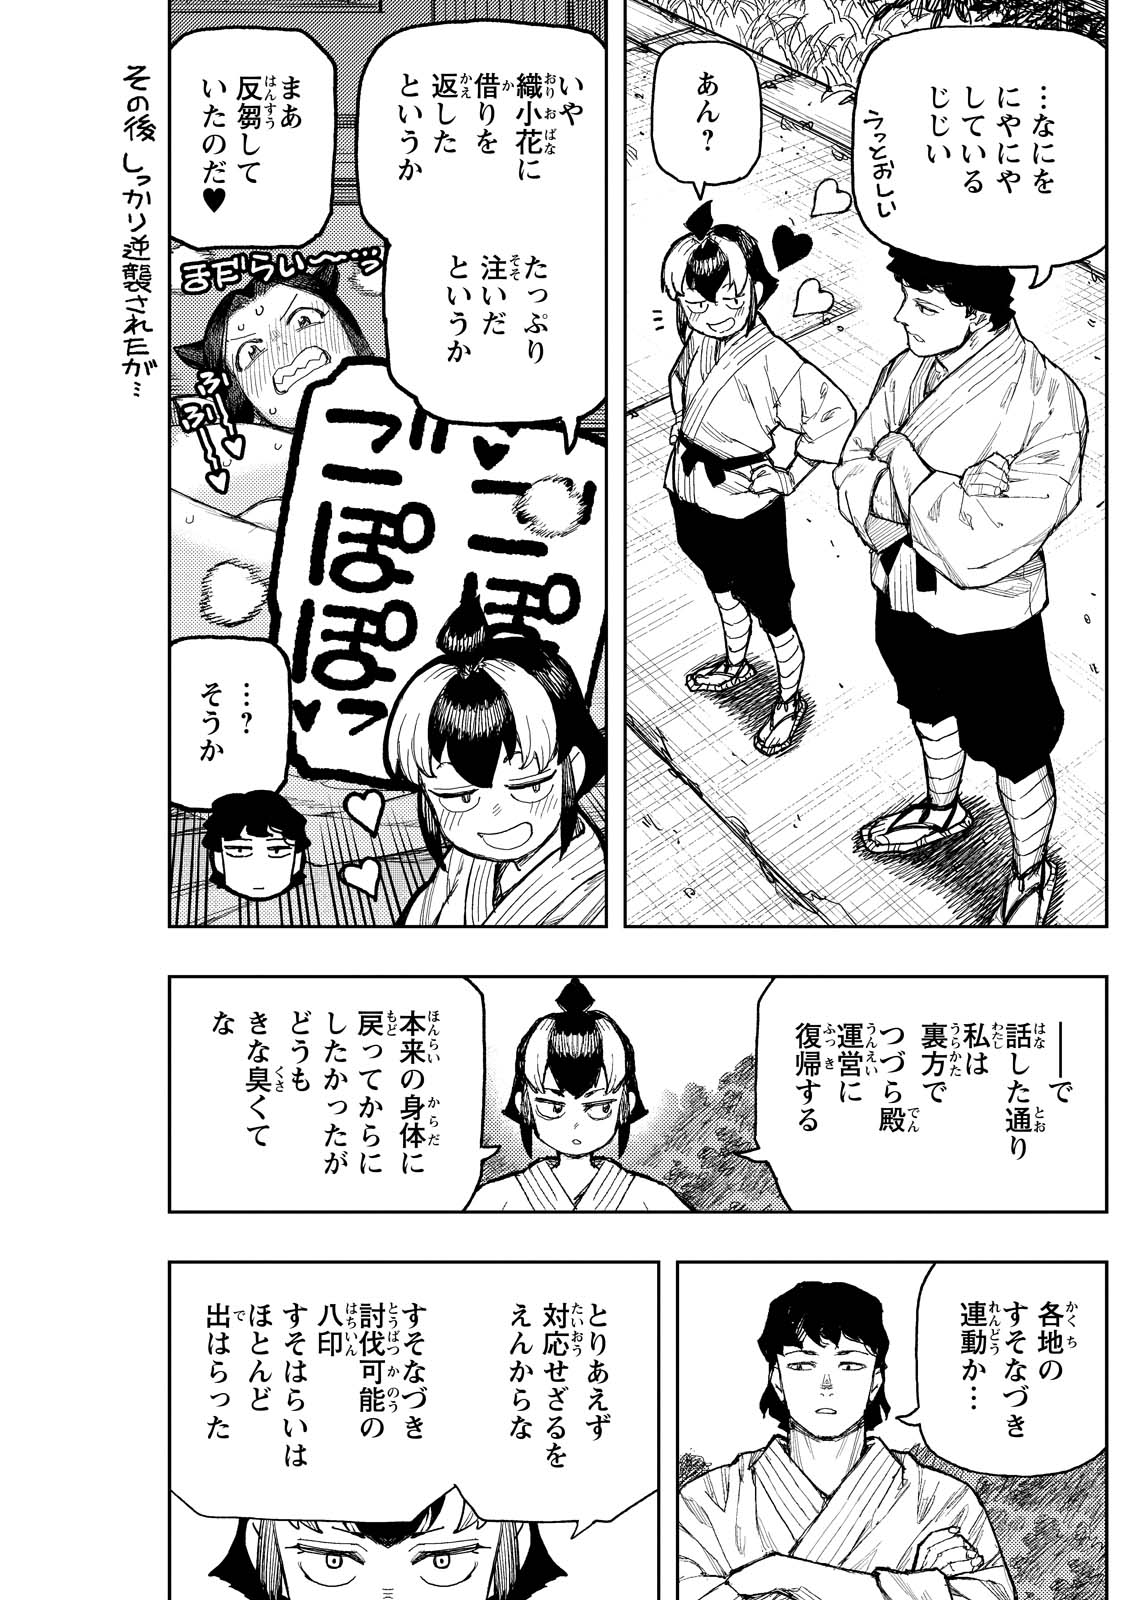 Tsugumomo - Chapter 169 - Page 15